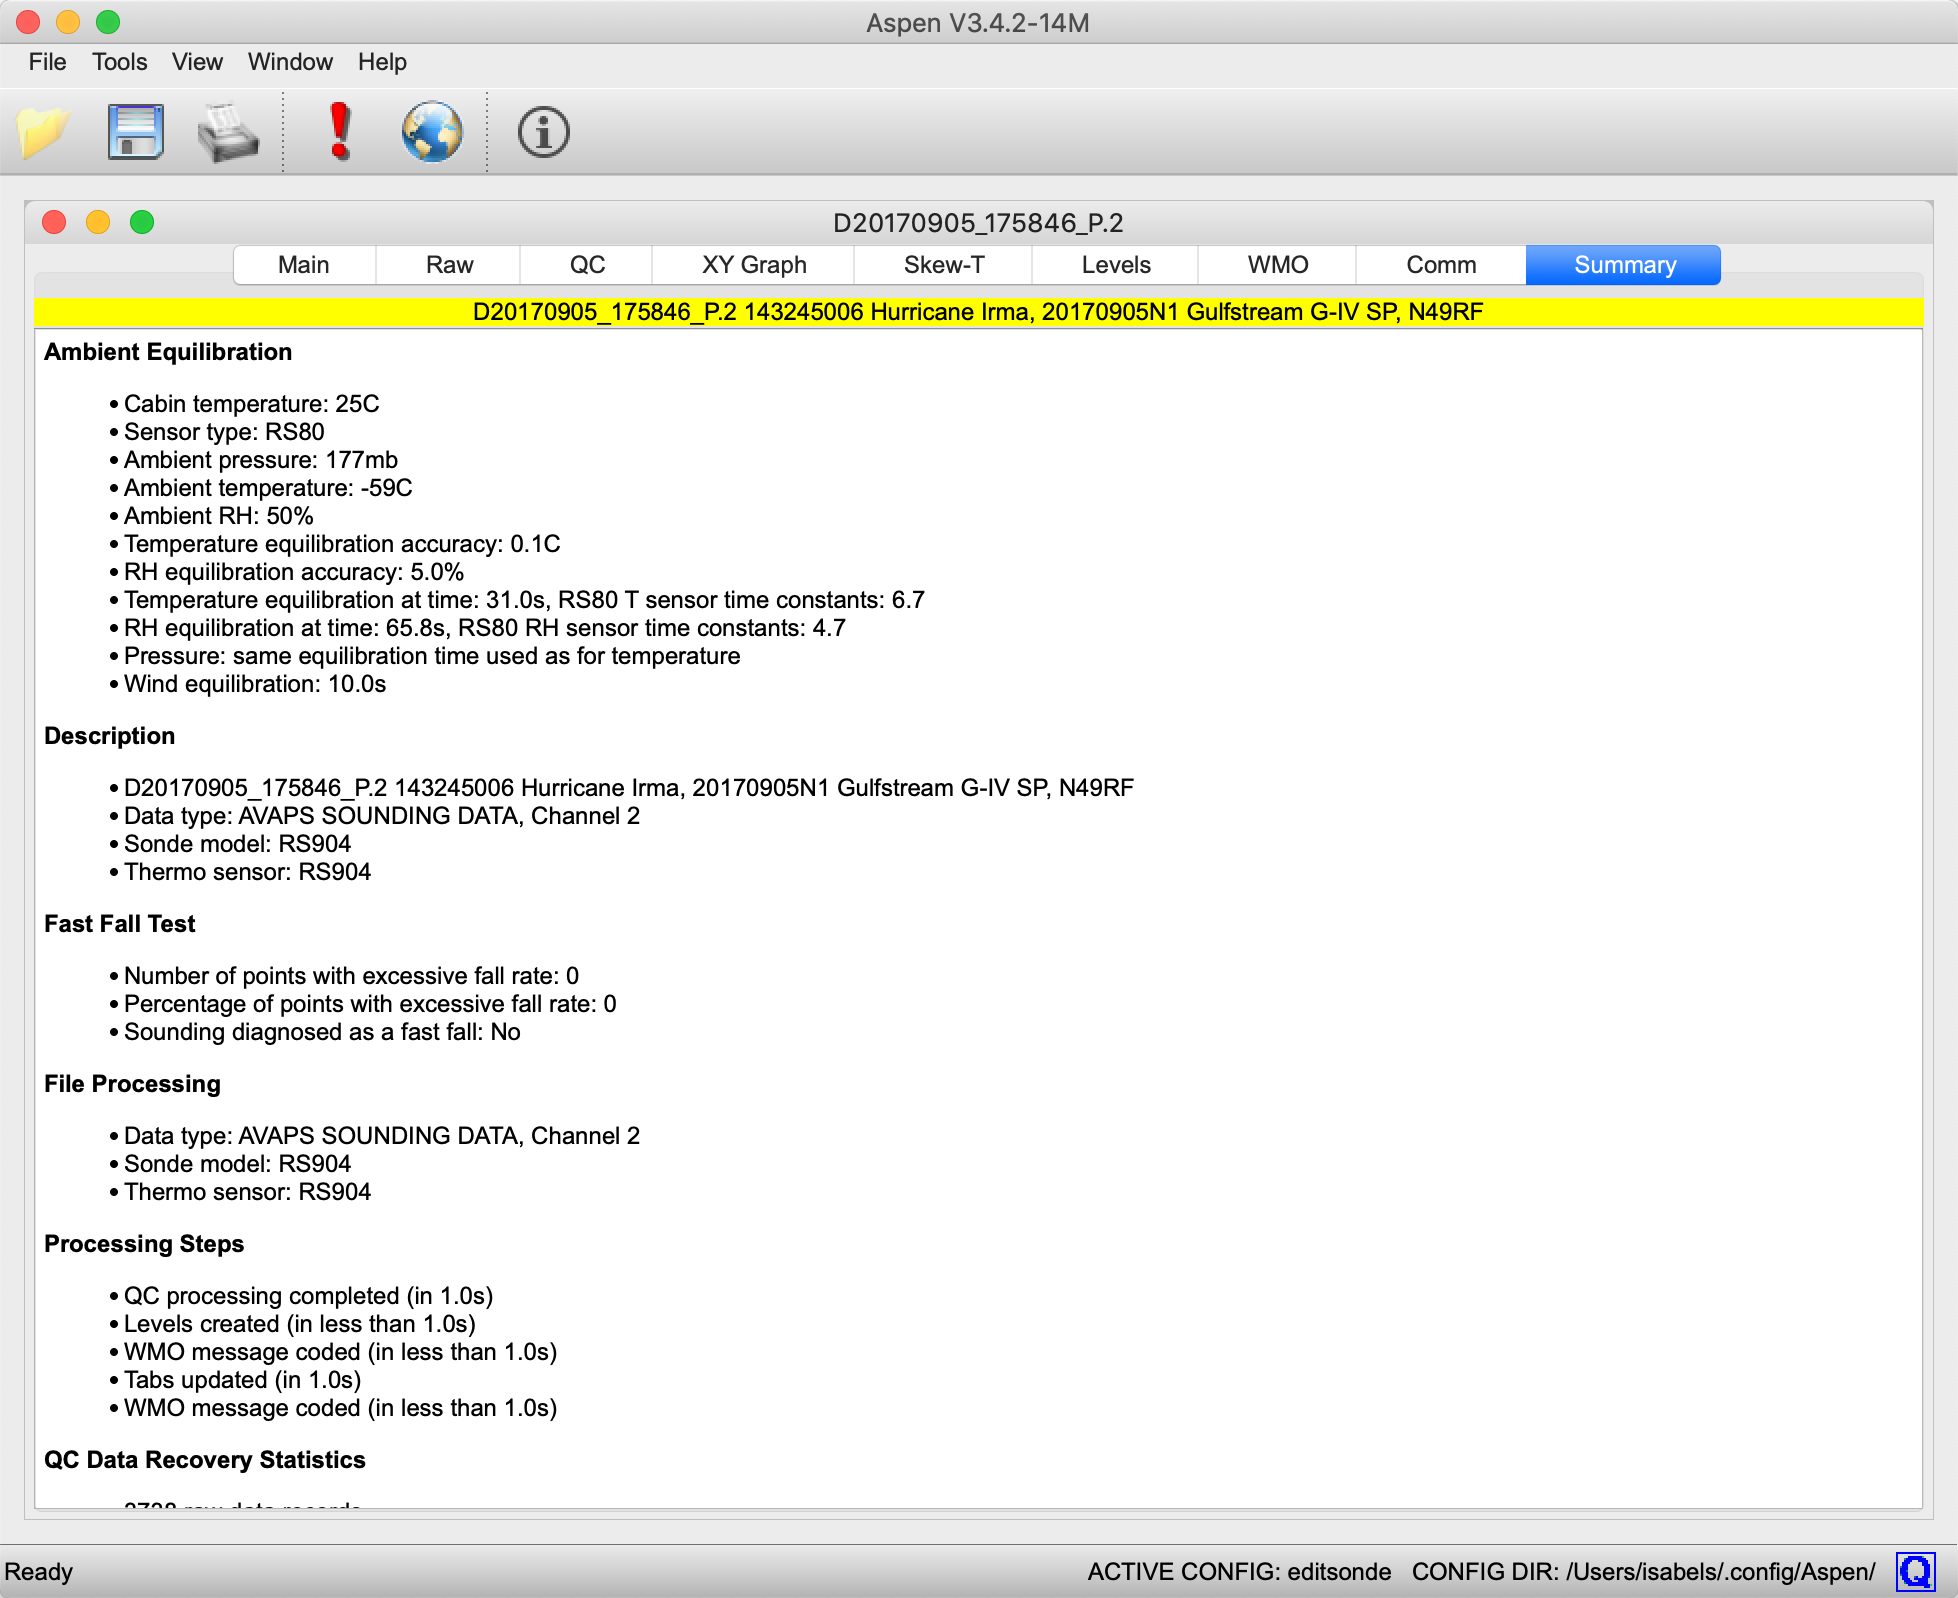 Screenshot of Summary tab in Aspen